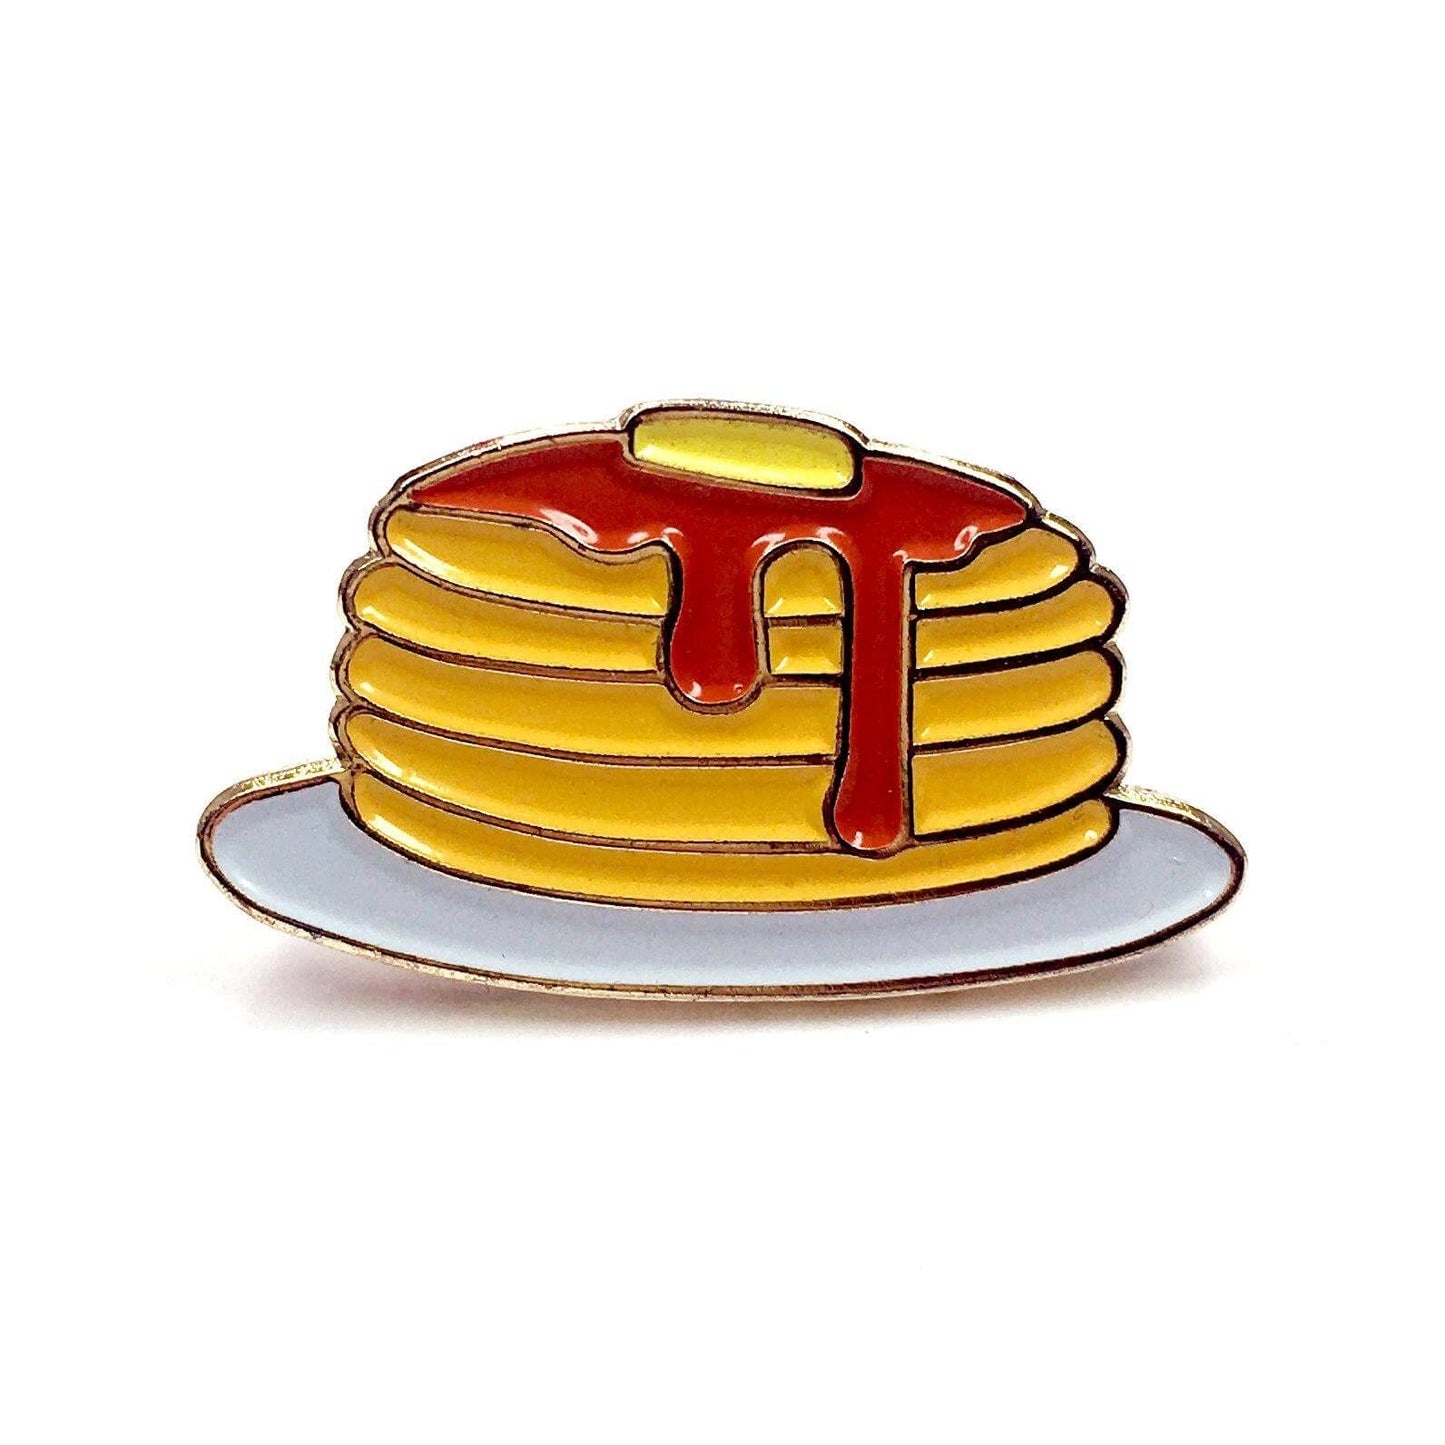 Pin de Bellismargarites en pancake